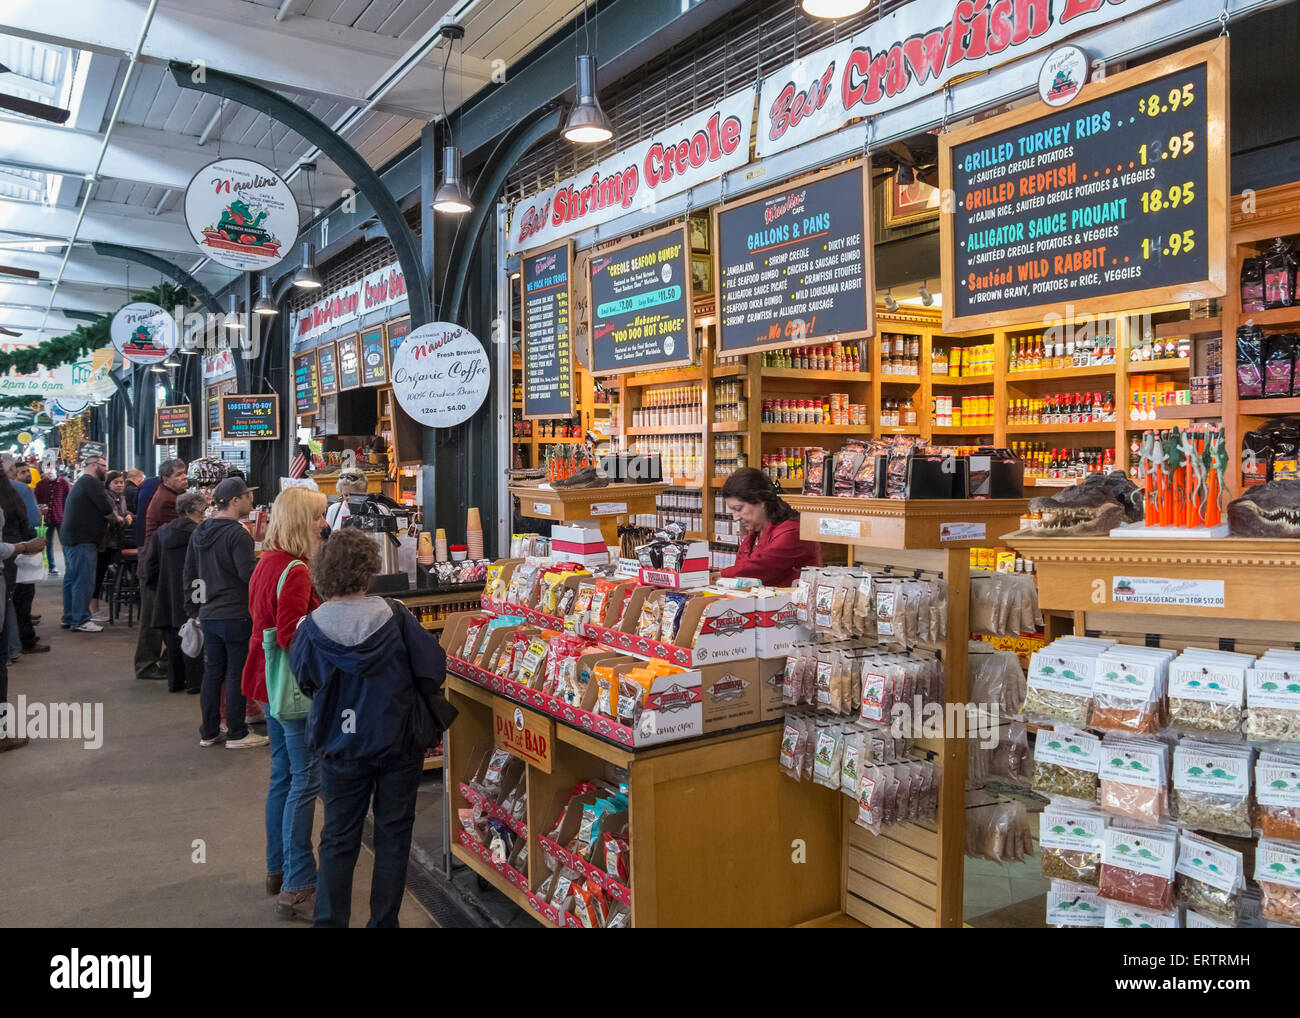 Inside the French Market, New Orleans, Louisiana, USA Stock Photo